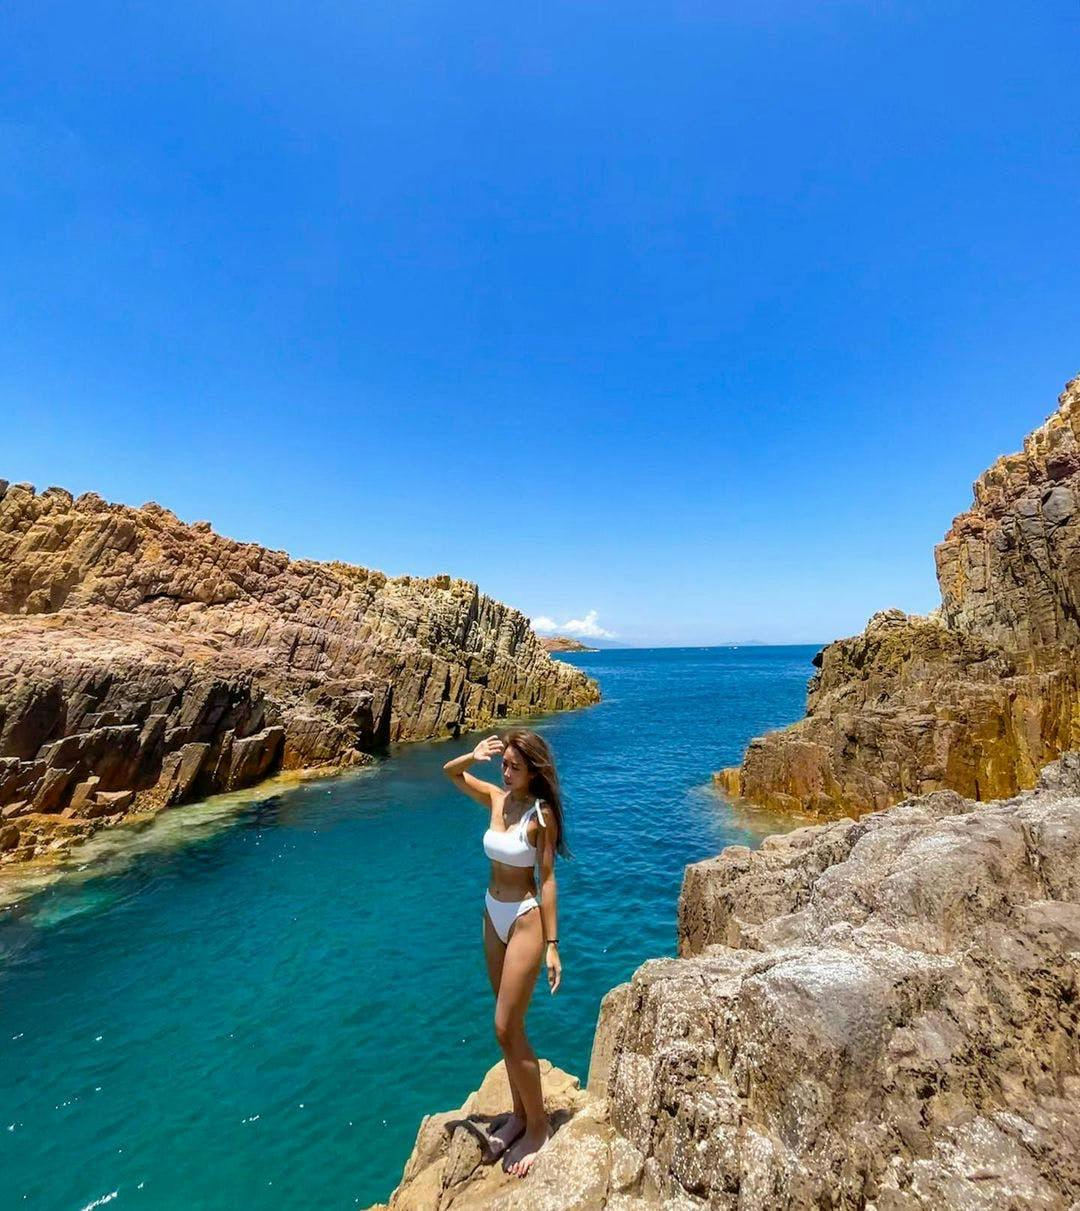 nature outdoors cliff promontory sea water person shoreline clothing bikini